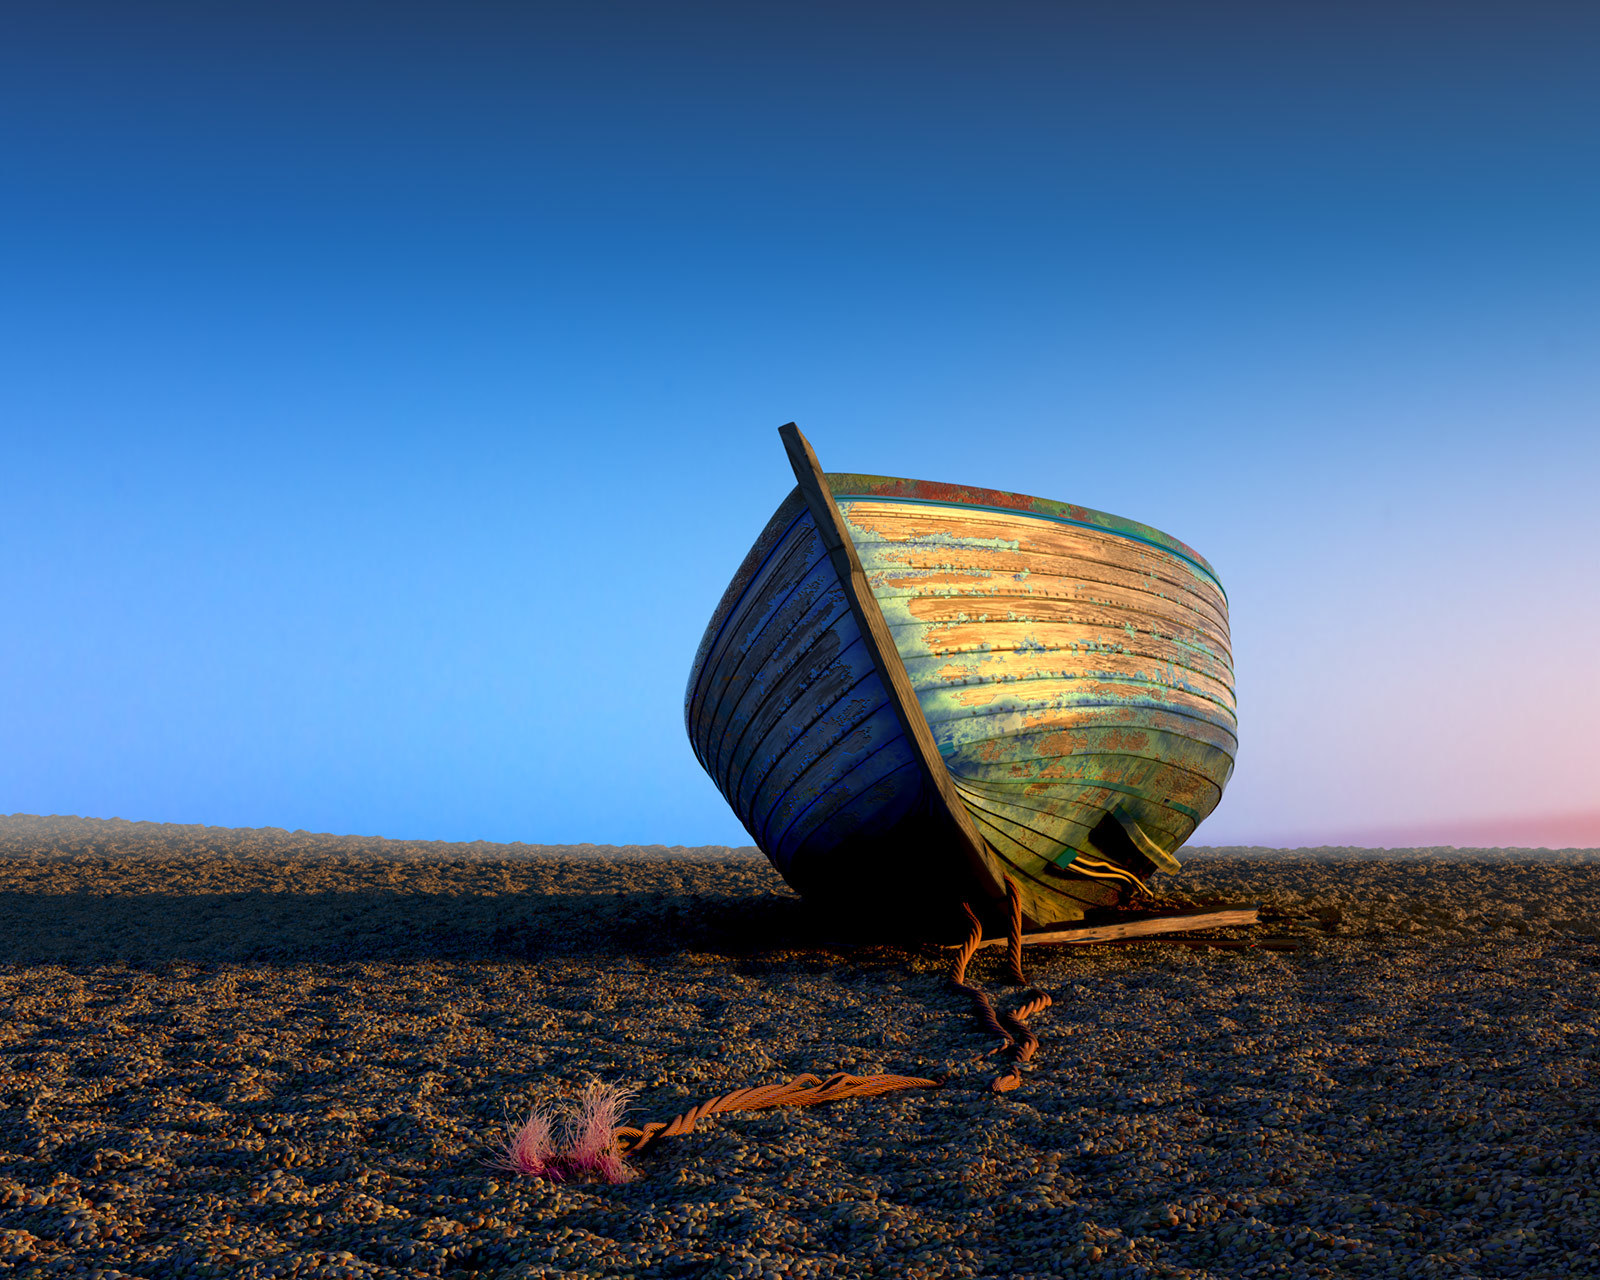 Boat on the beach by John Bavaresco